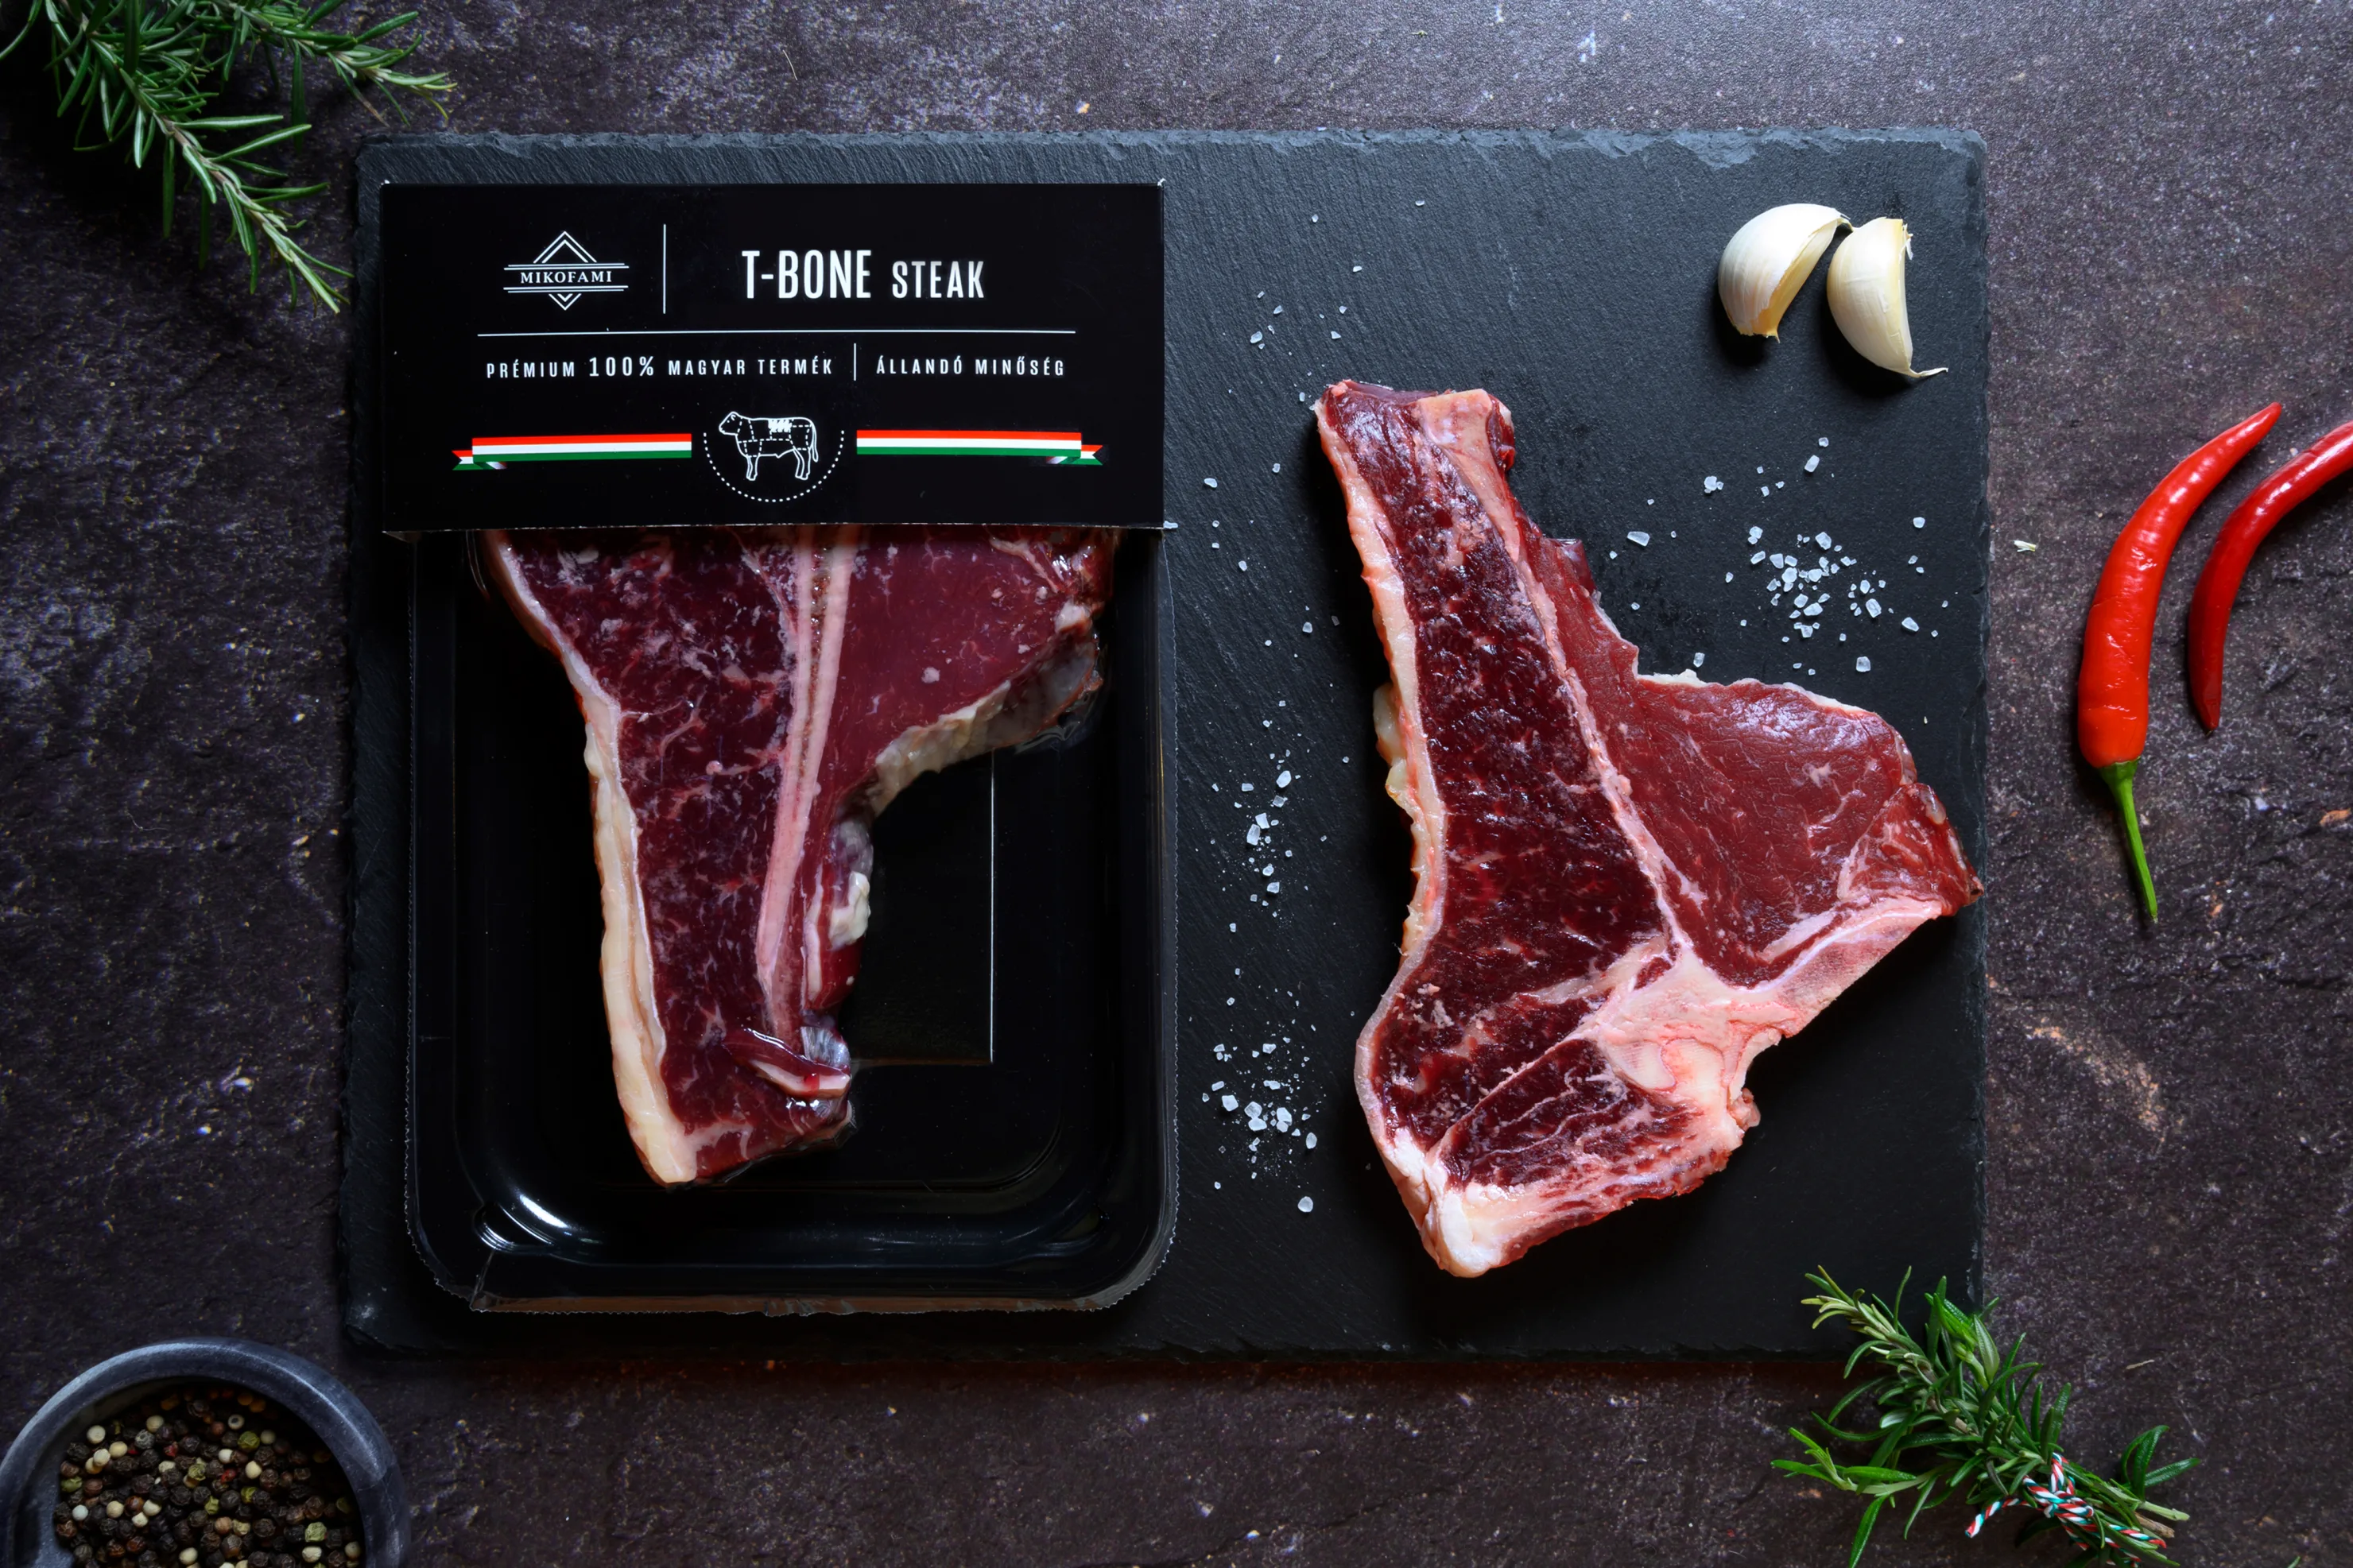 Mikofami Premium pagked t-bone steak